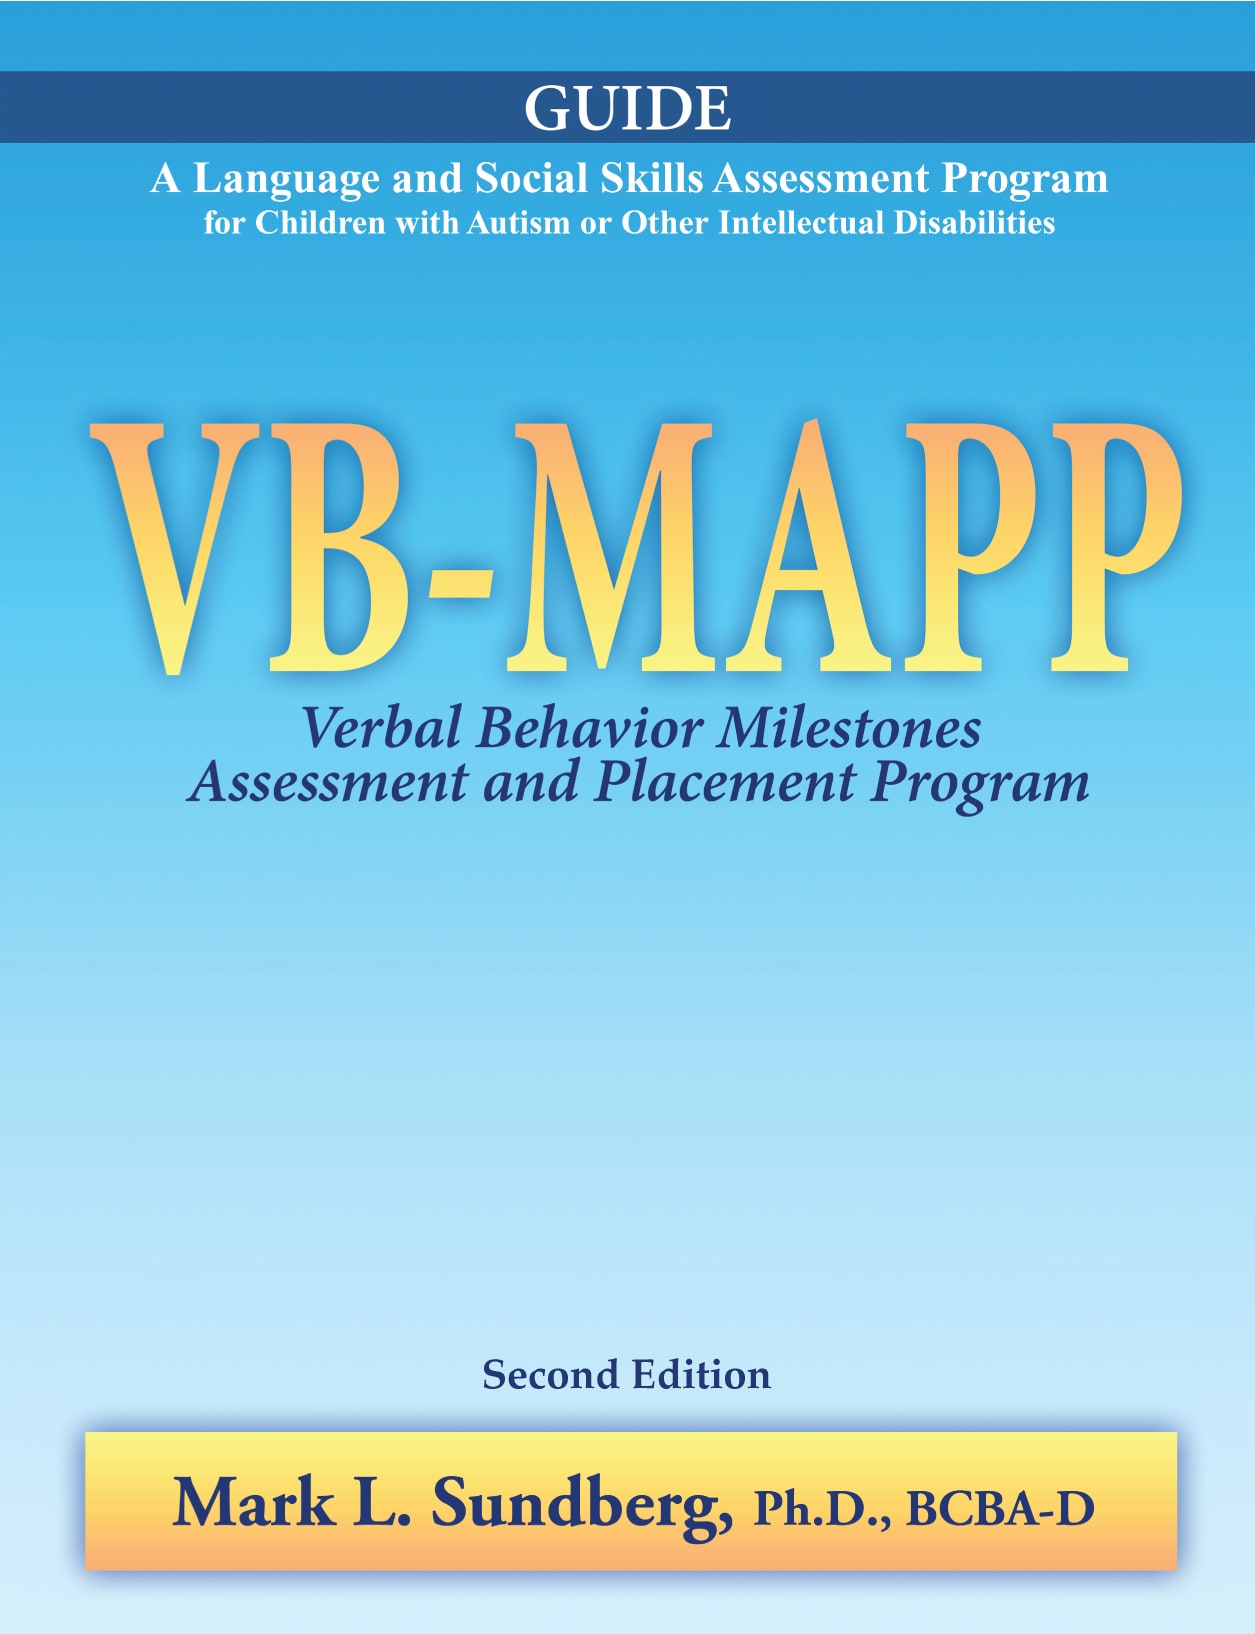 VBMAPP Guide AVB Press